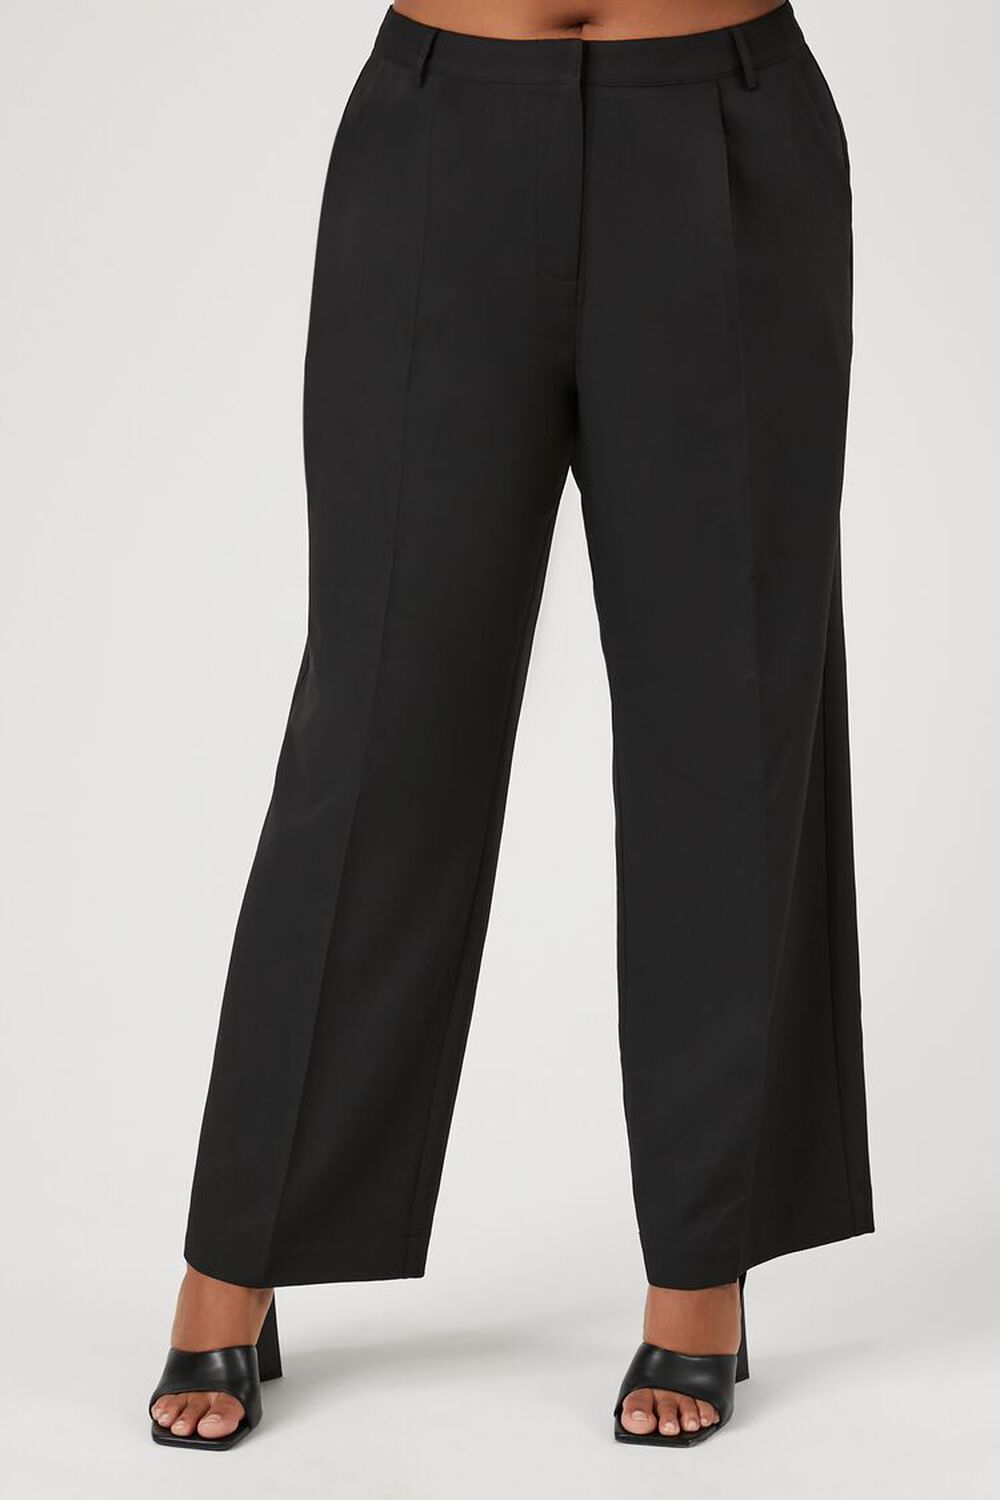 Blazer, Cropped Top and Elastic Waist Pants Plus Size Set